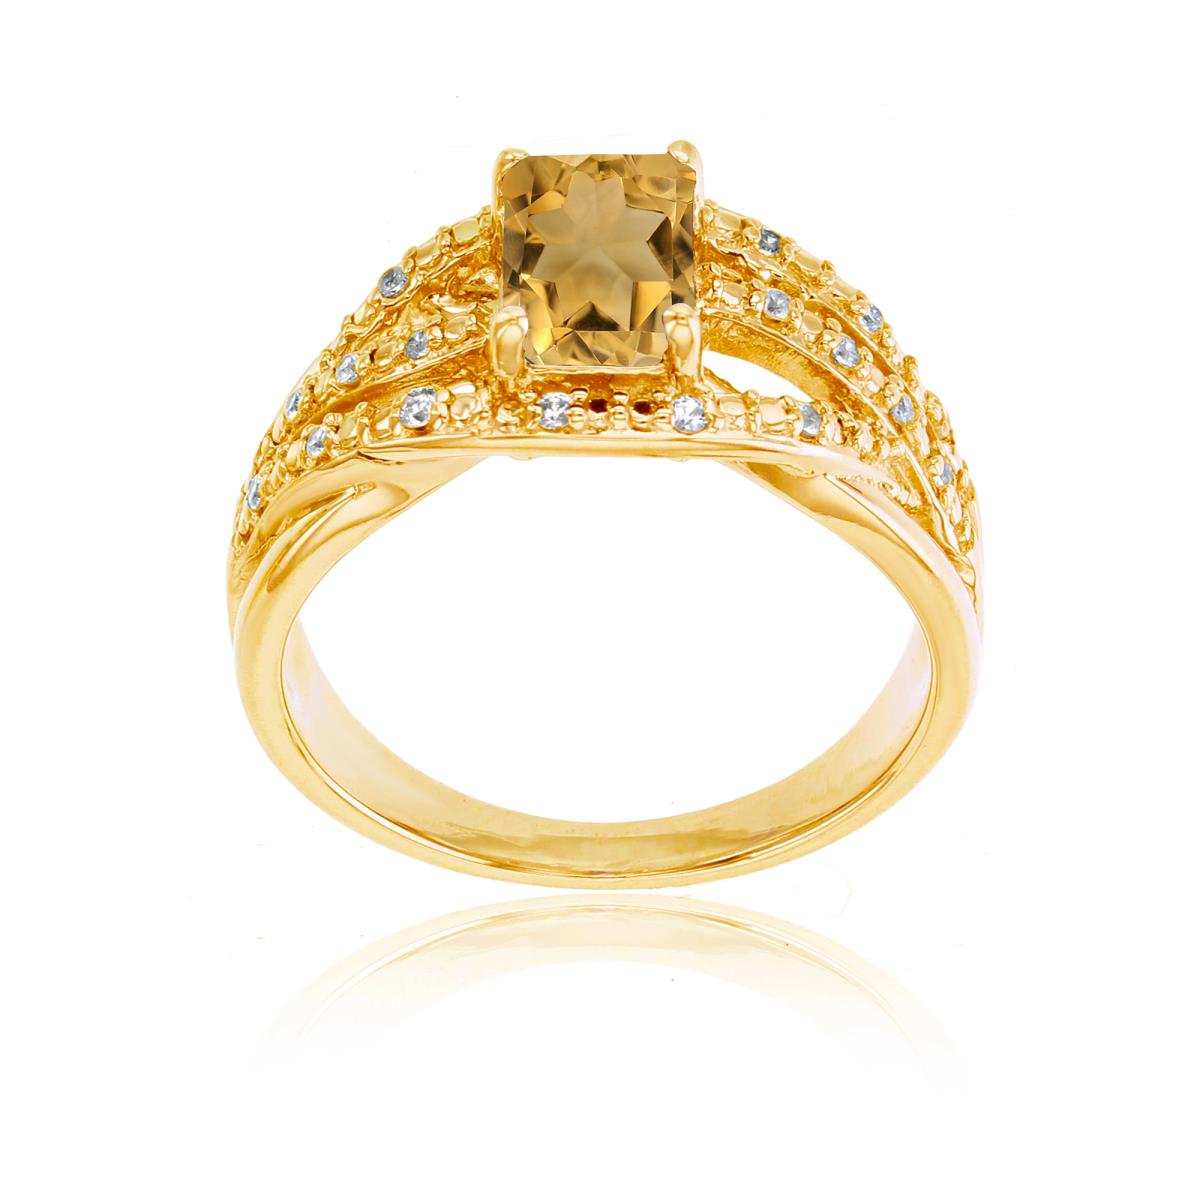 10K Yellow Gold 0.10 CTTW Rnd Diamond & 7x5mm Oct Citrine Ring